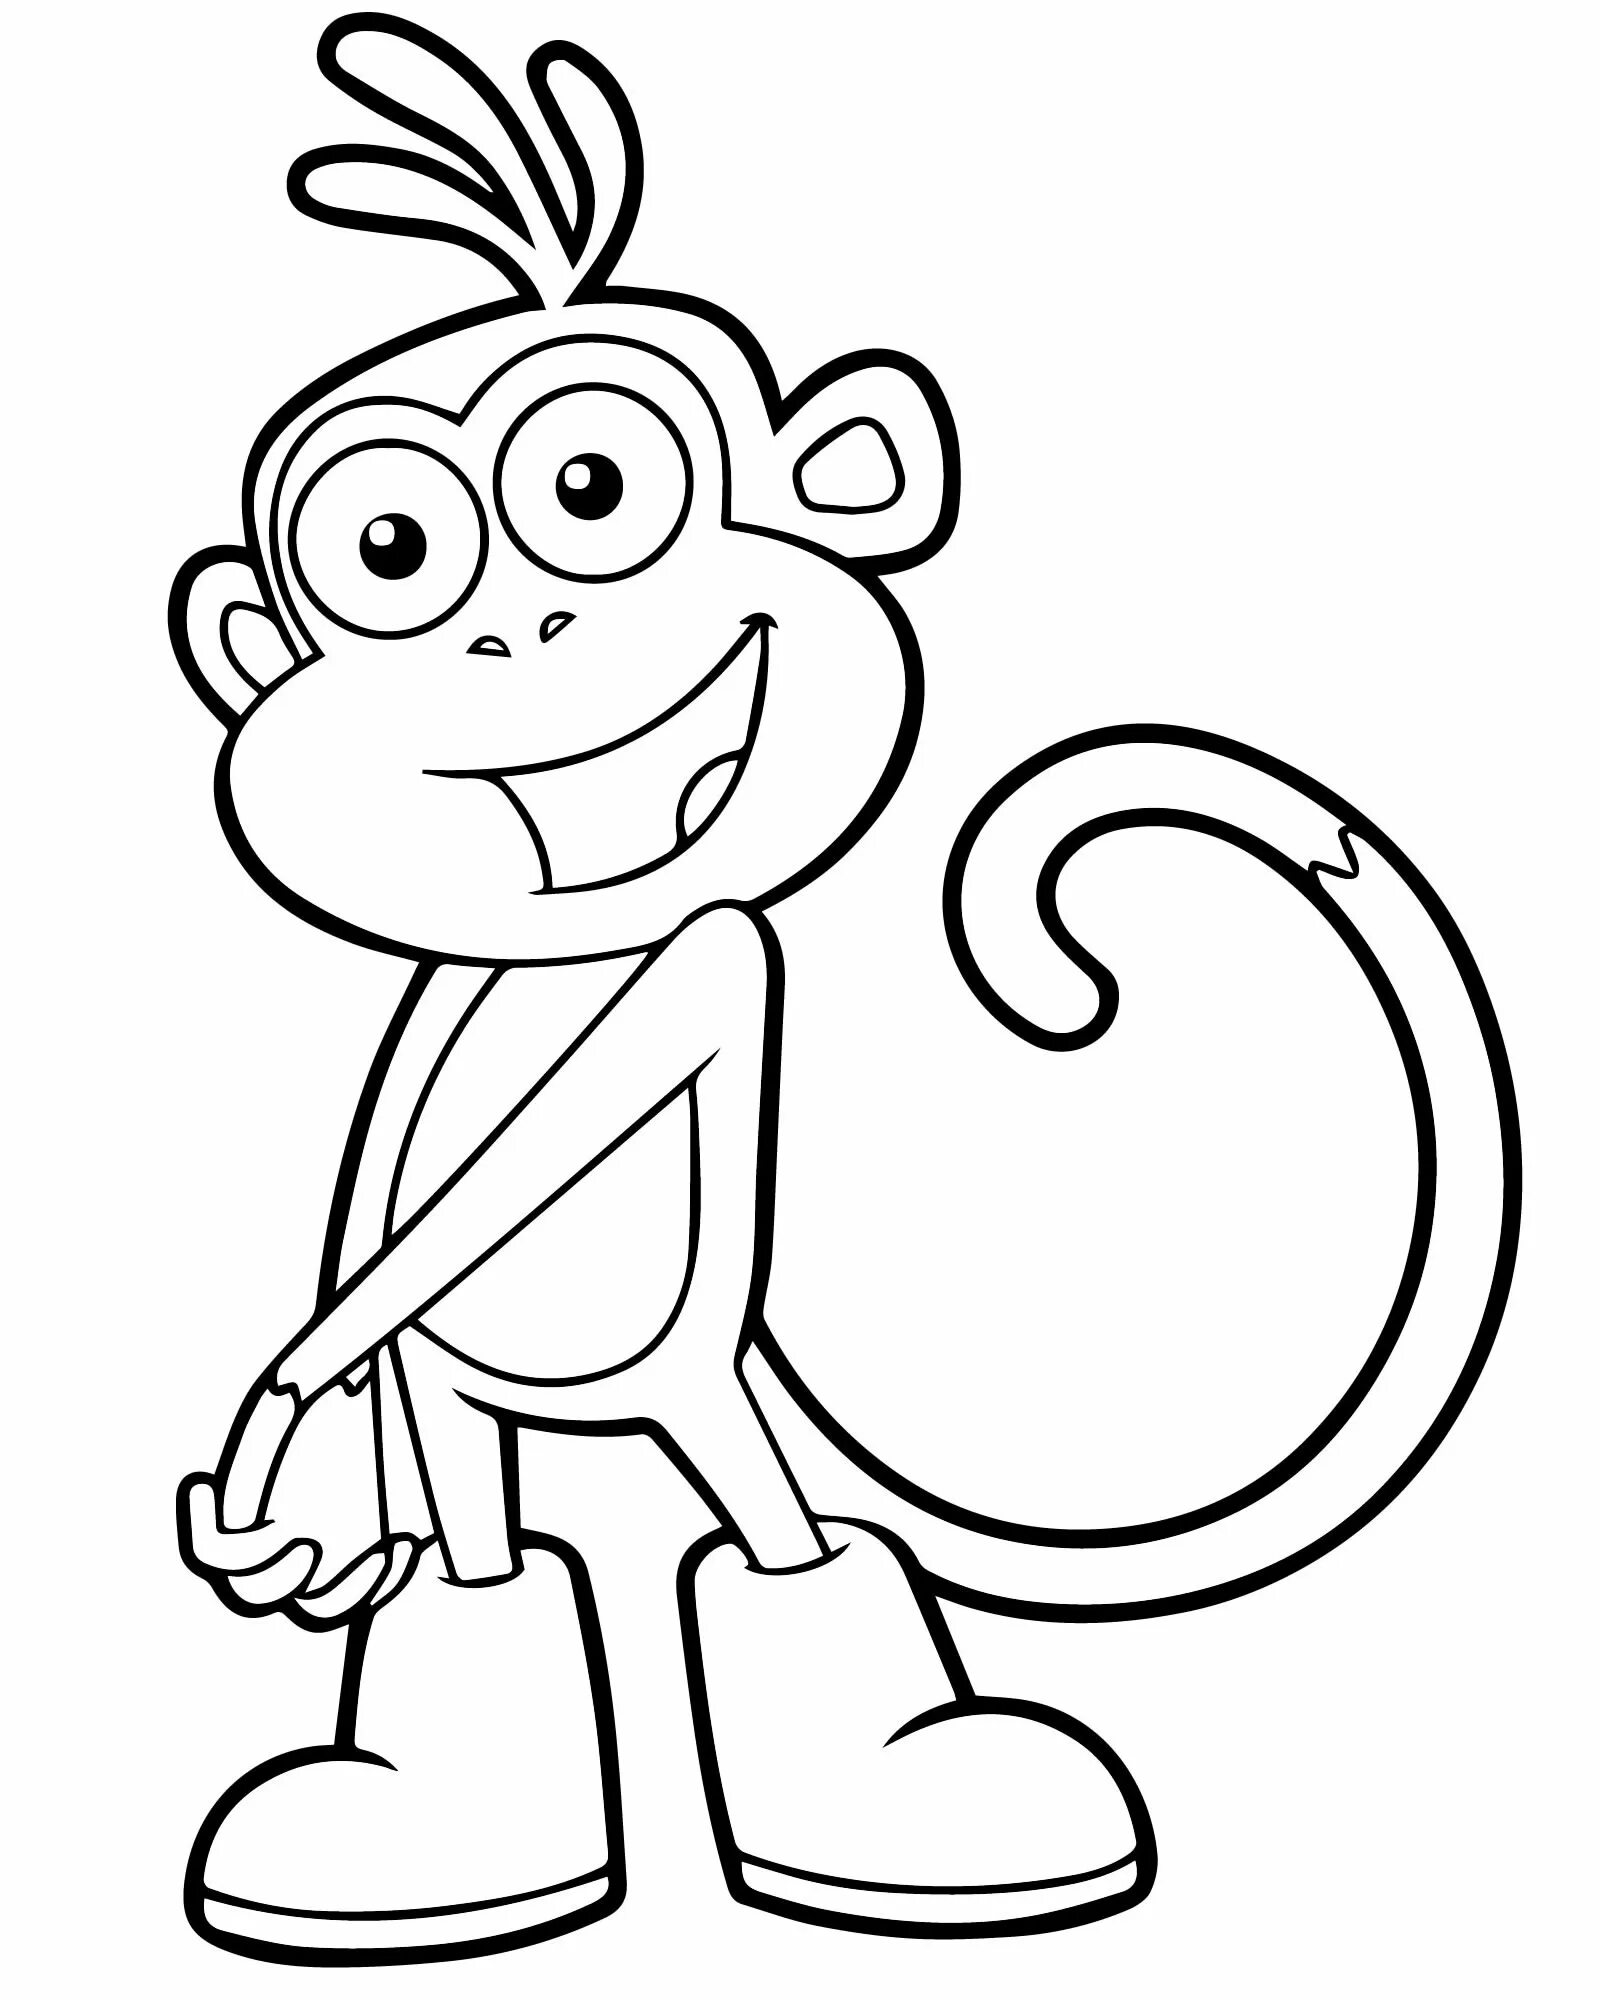 Incredible monkey coloring book